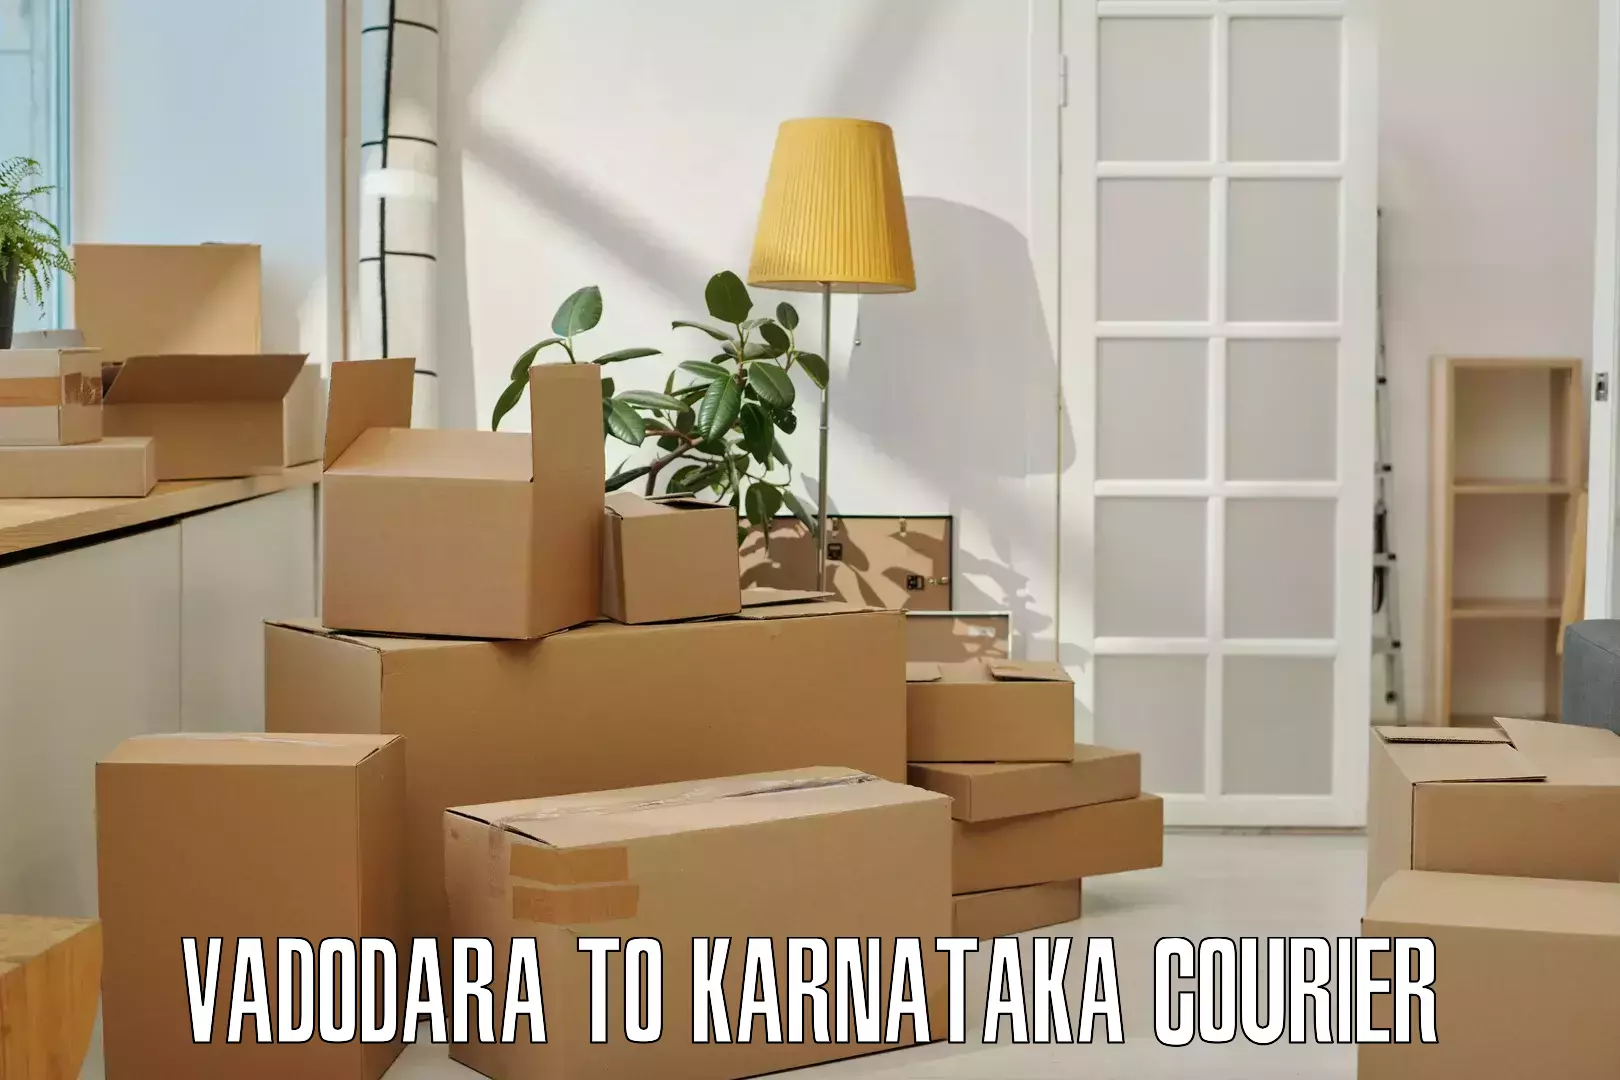 User-friendly delivery service Vadodara to Mangalore